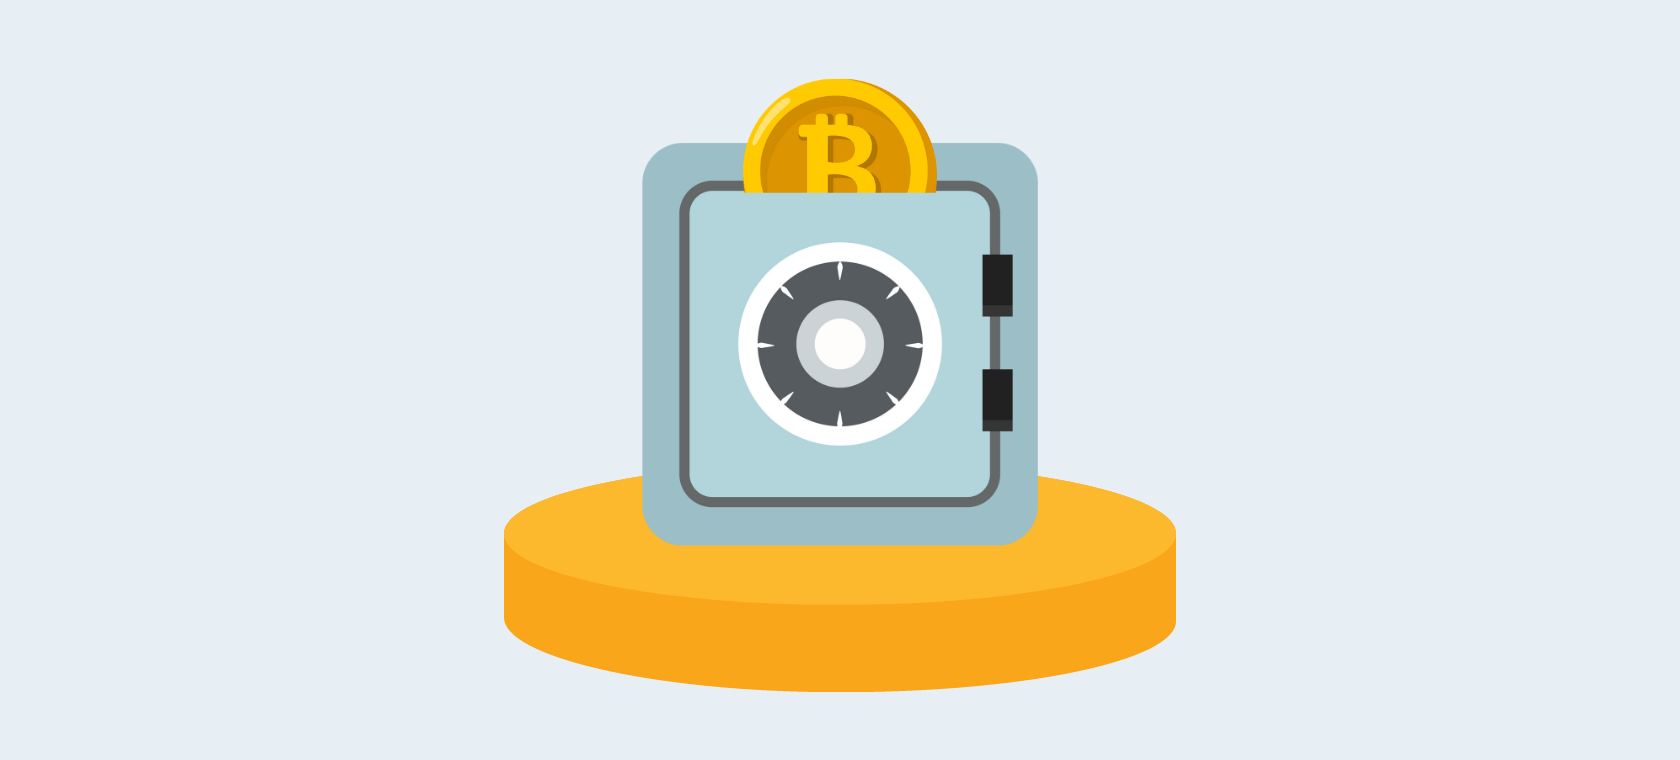 Sigurna pohrana kriptovaluta - kako odabrati najbolji kripto wallet?